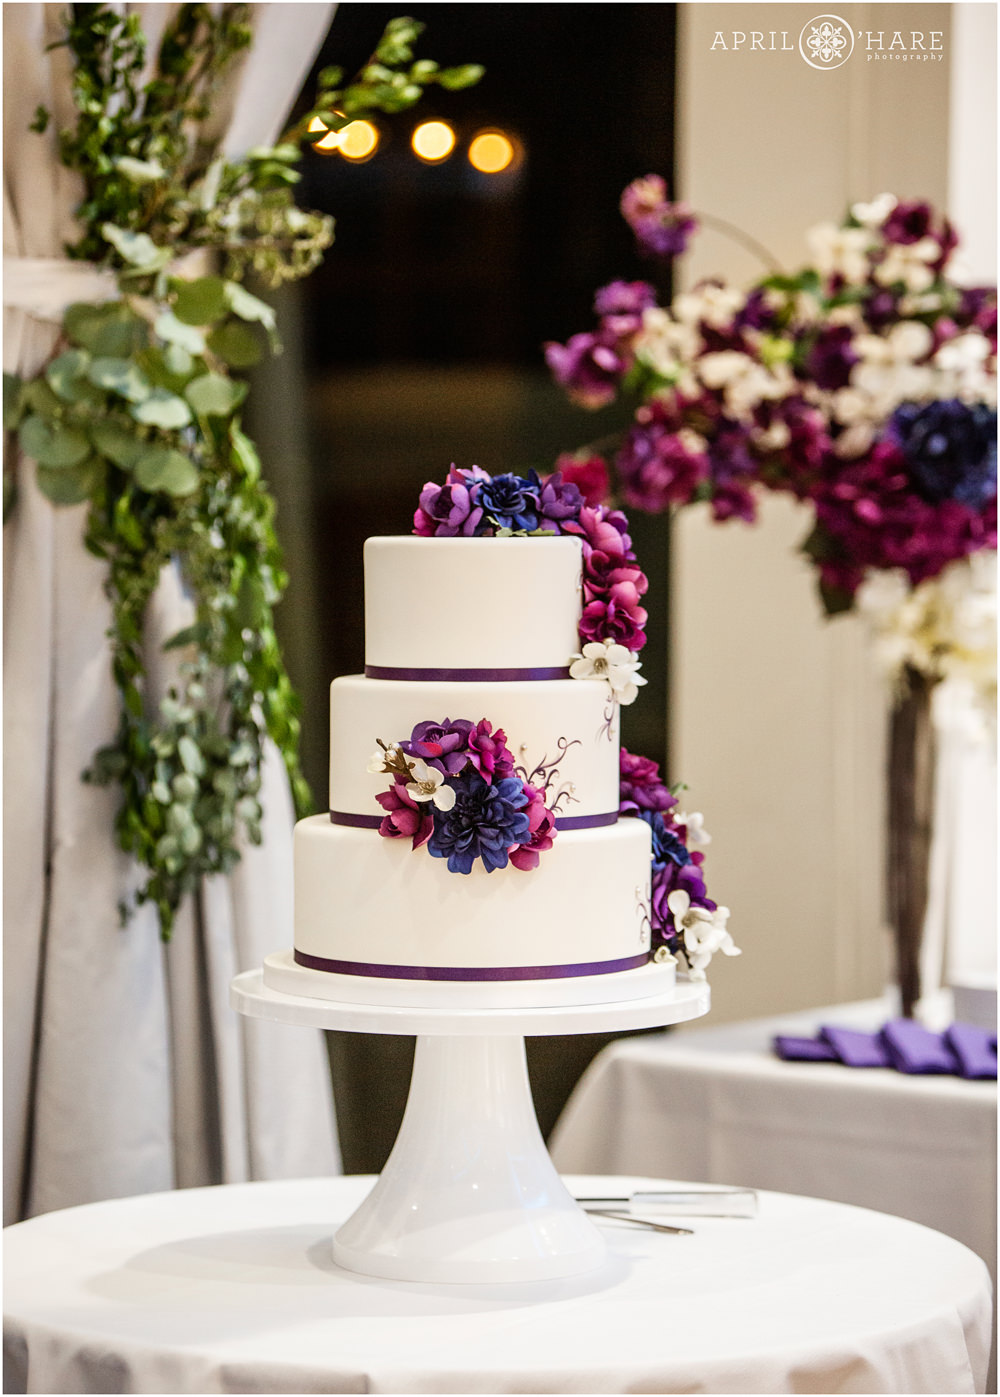 Three tiered white wedding cake with purple florals at Wedgewood Weddings Ashley Ridge Wedding Reception in Highlands Ranch Colorado